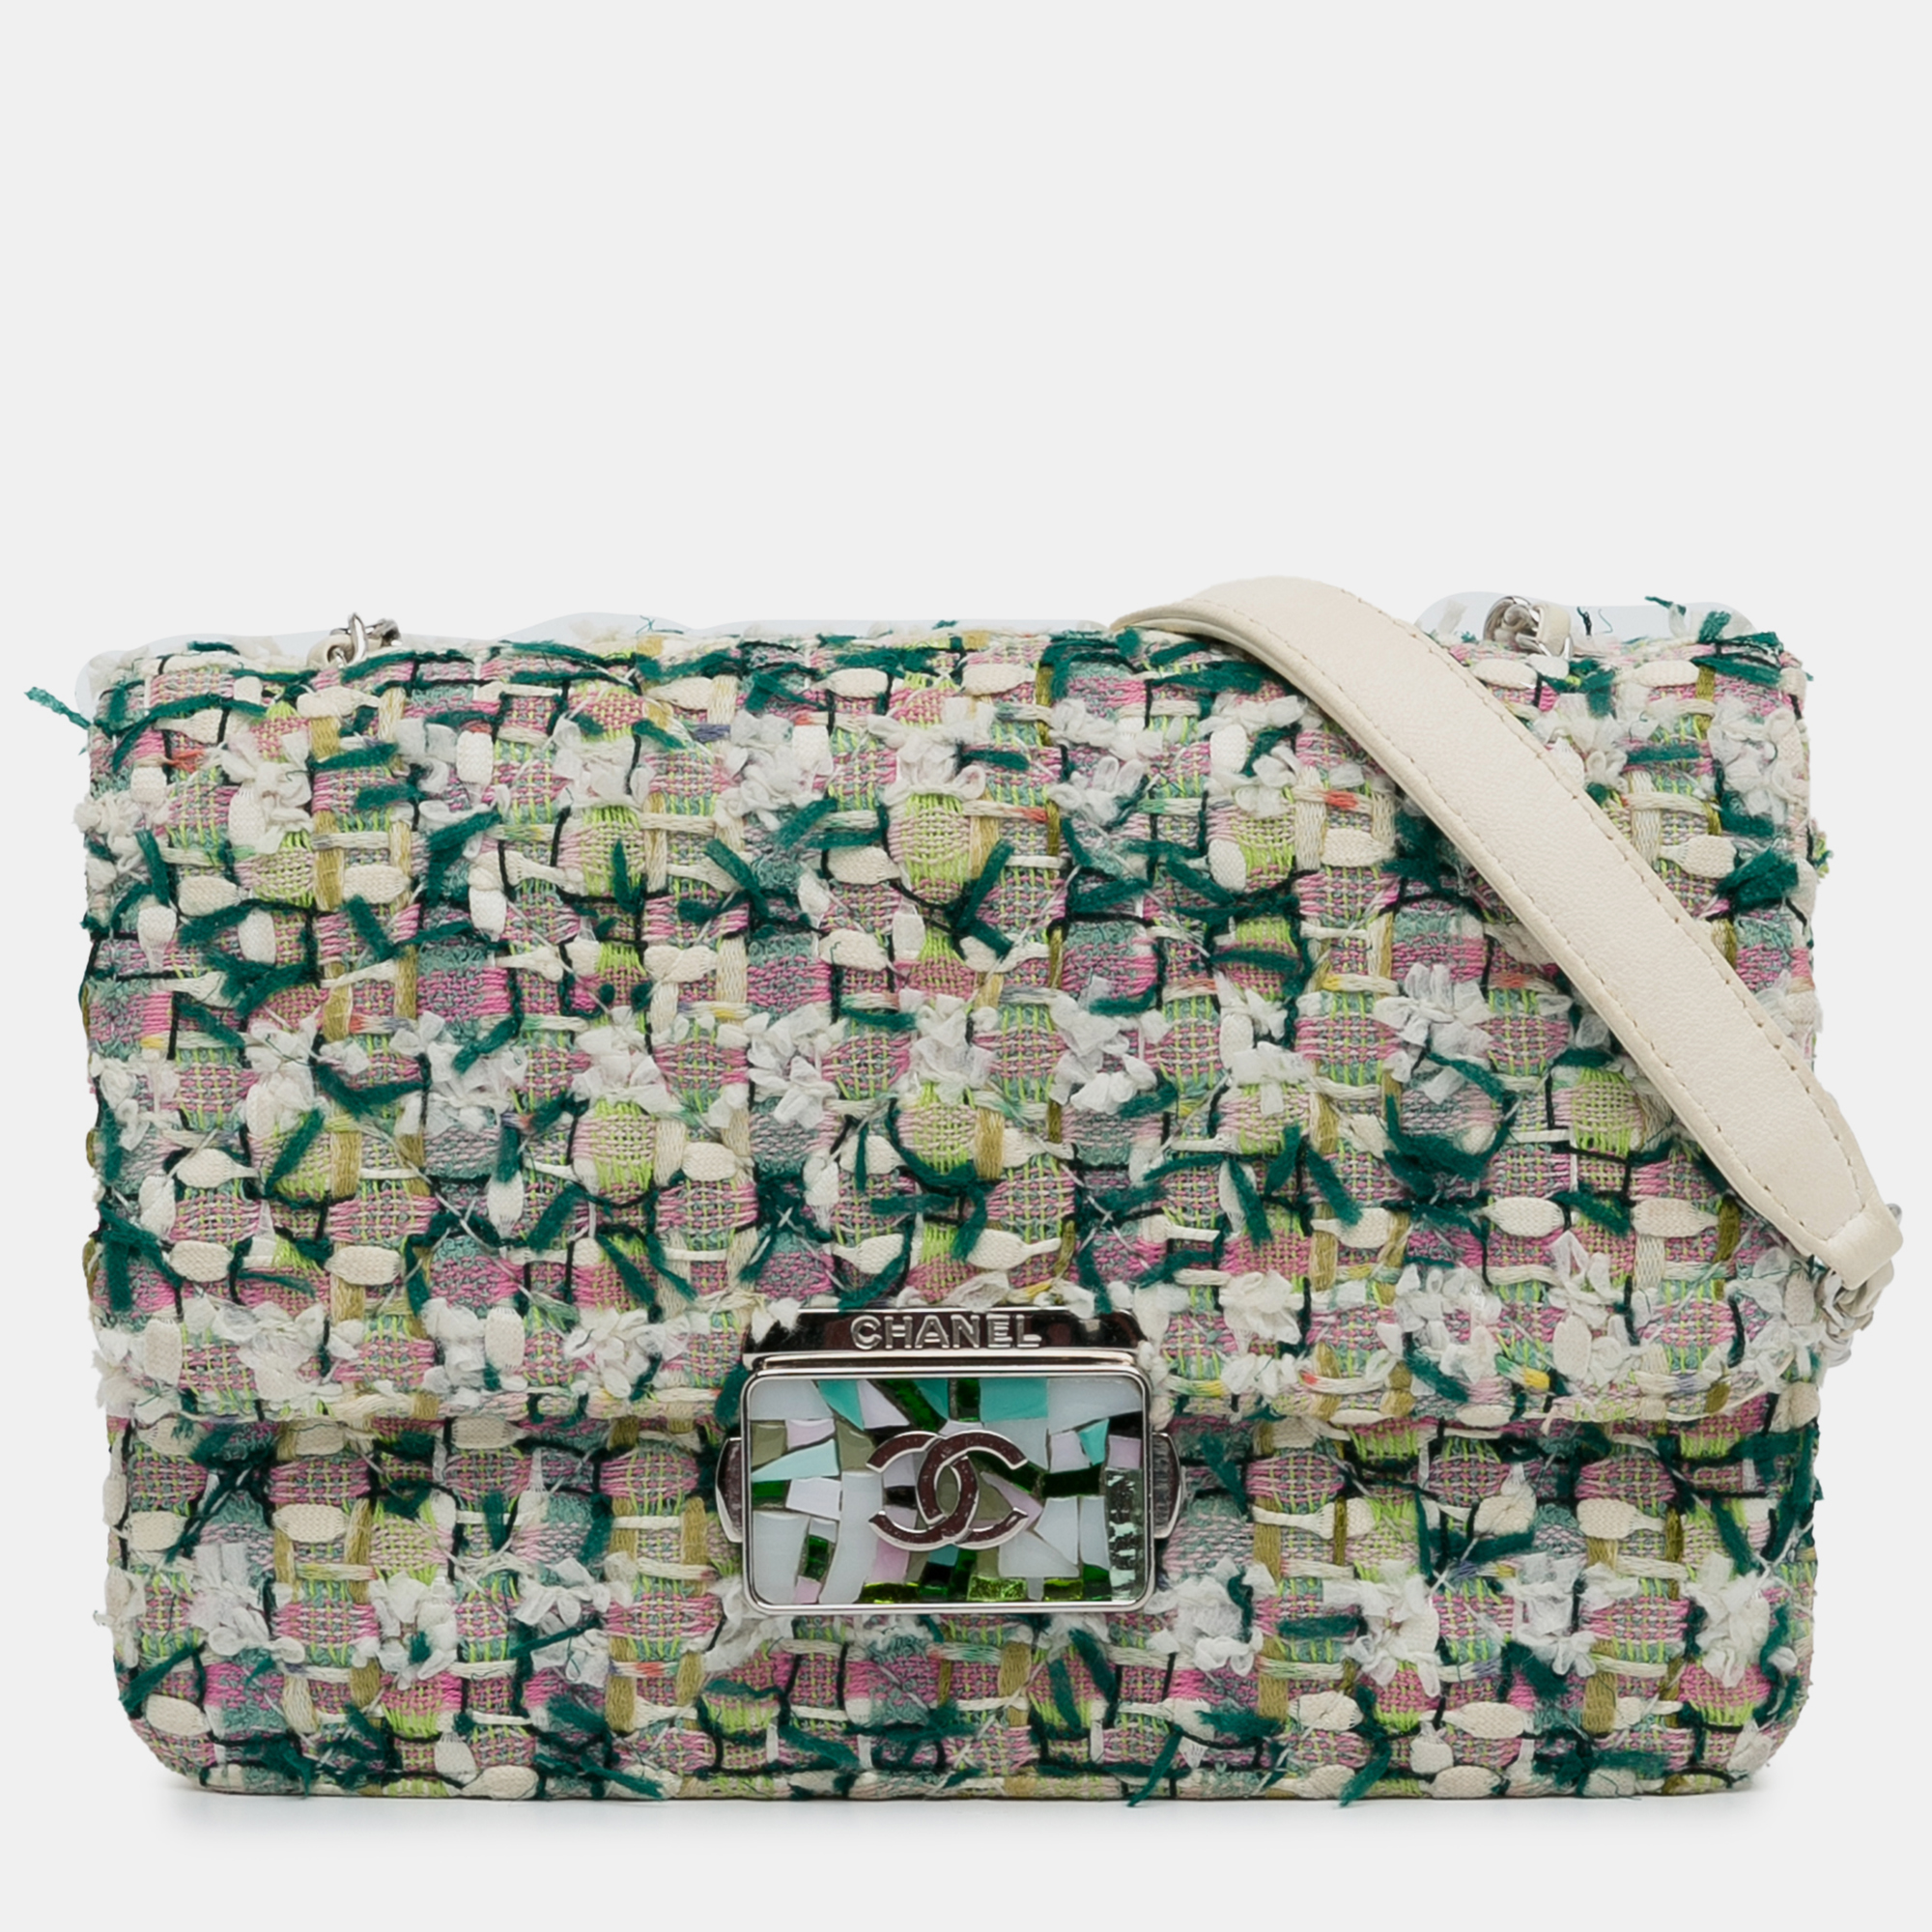 Chanel tweed beauty lock flap bag